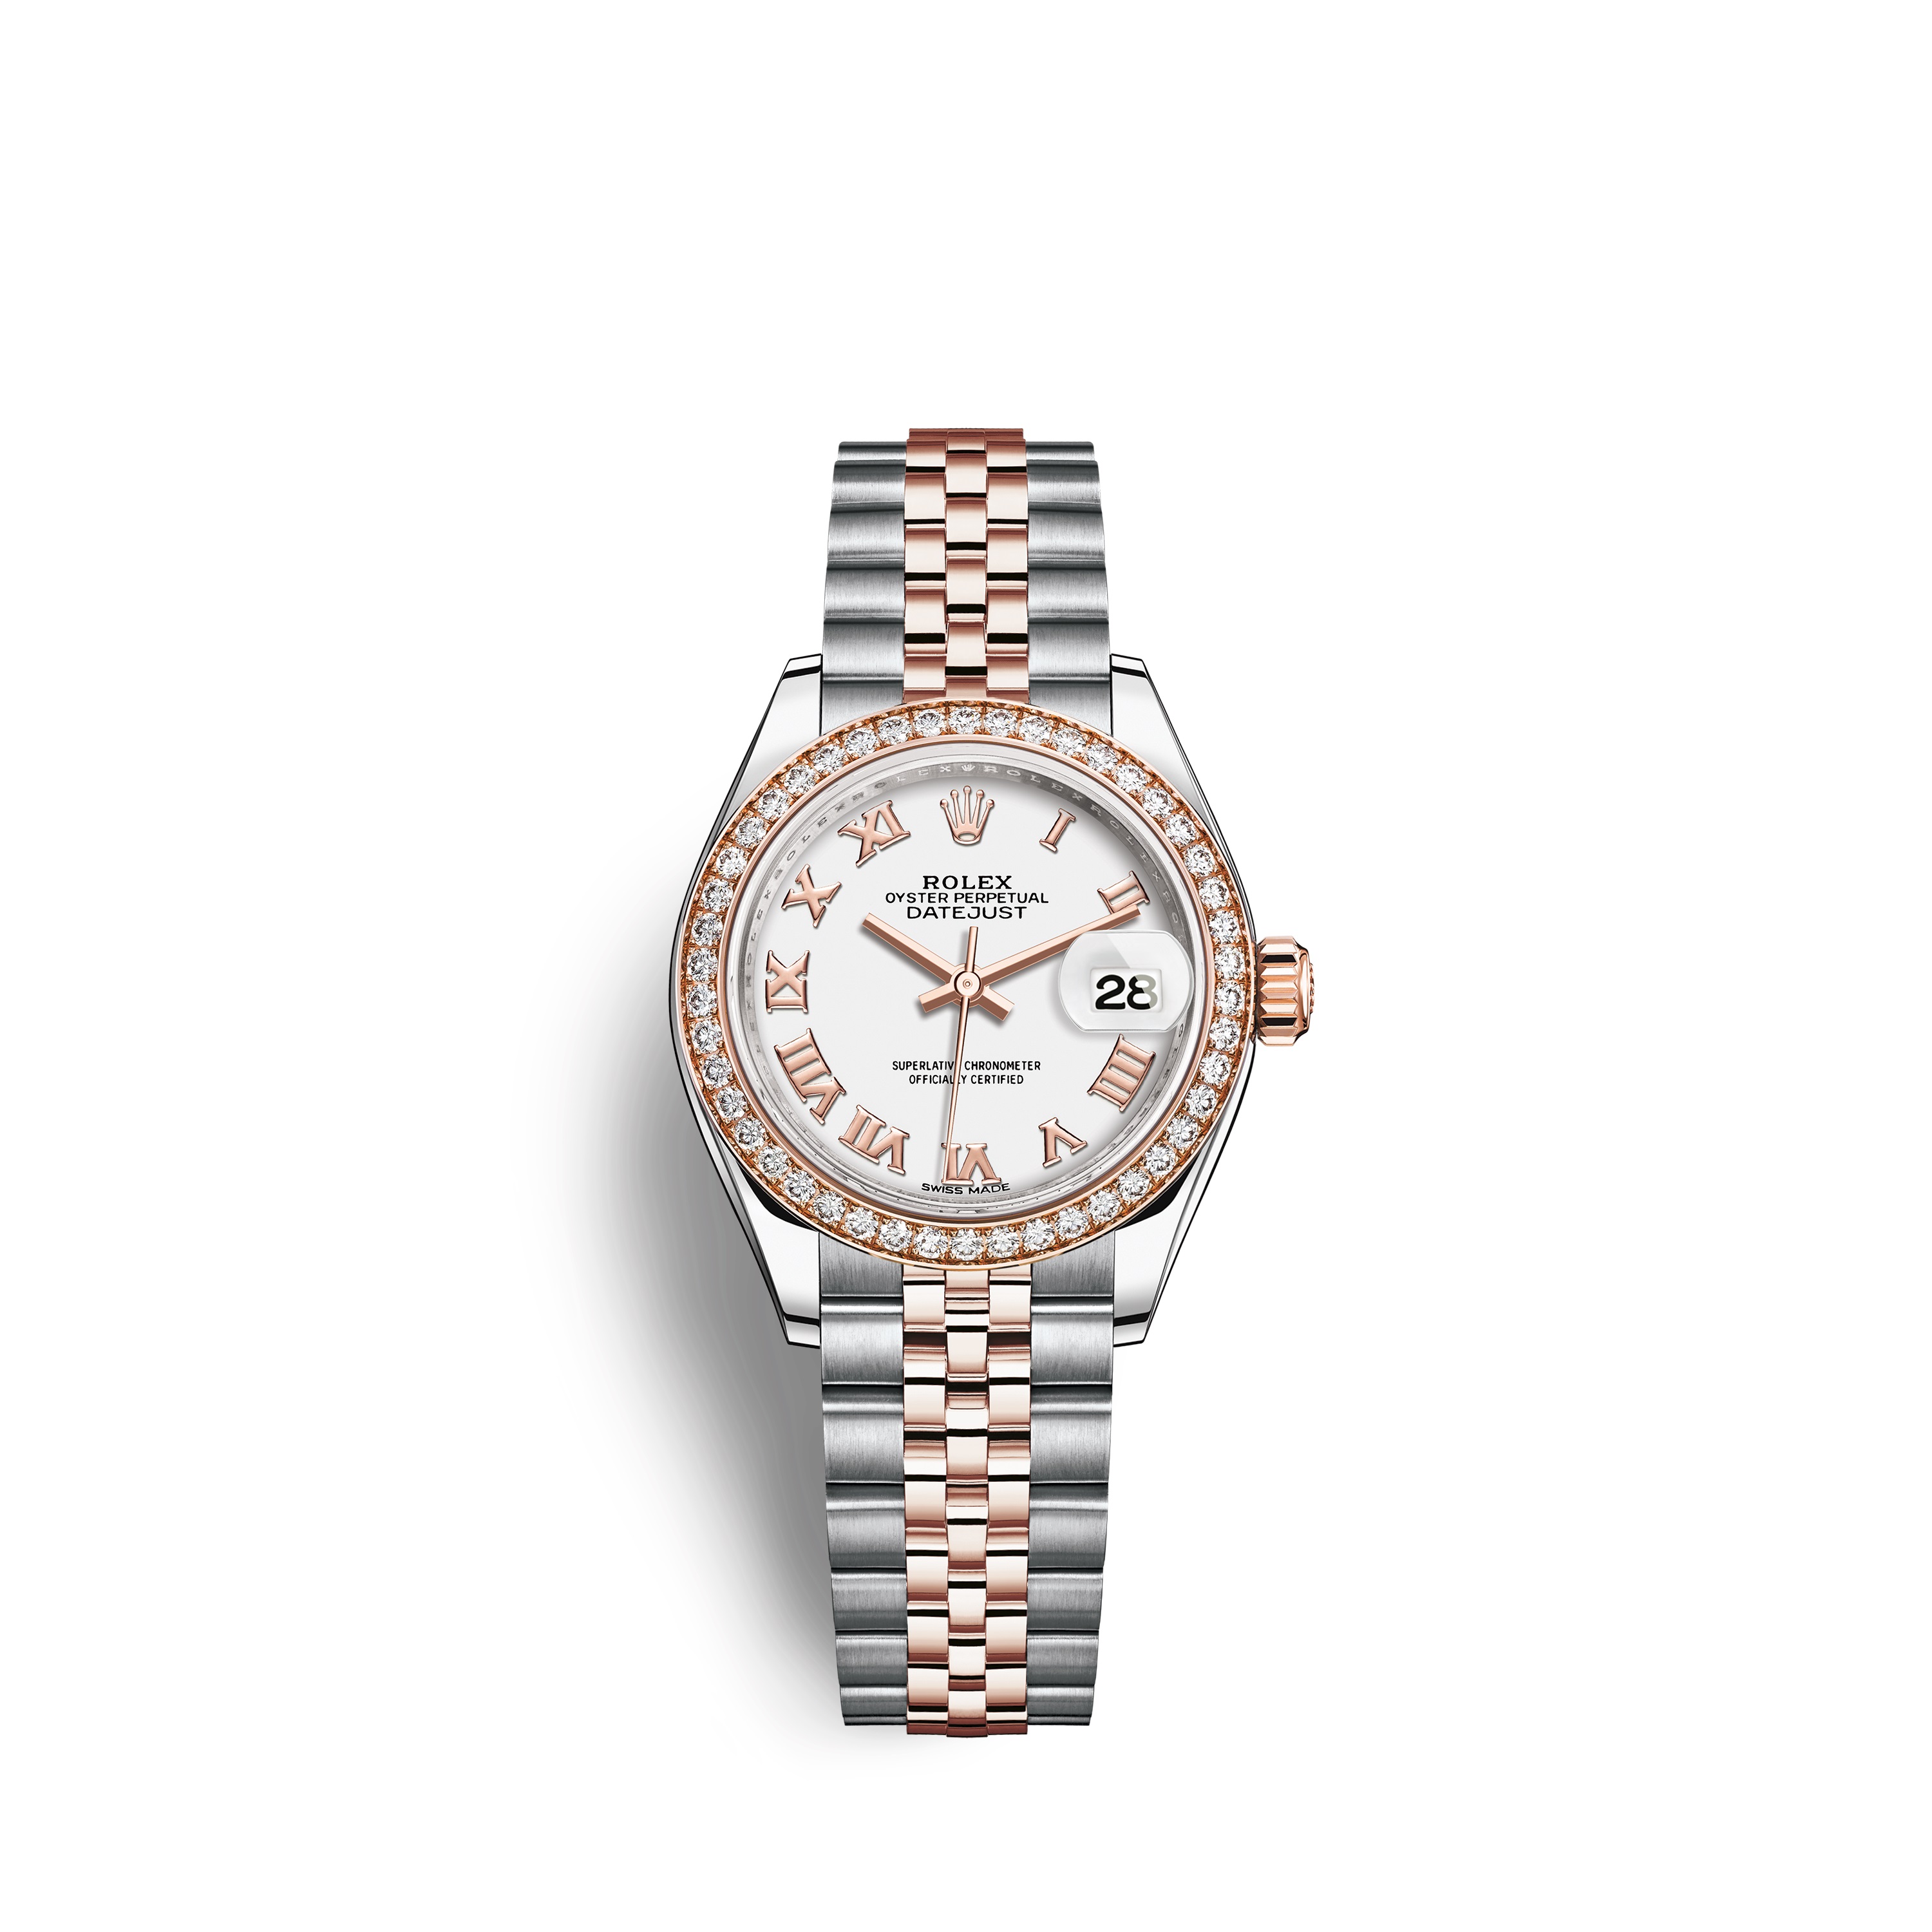 Lady-Datejust 28 279381RBR Rose Gold & Diamonds Watch (White)